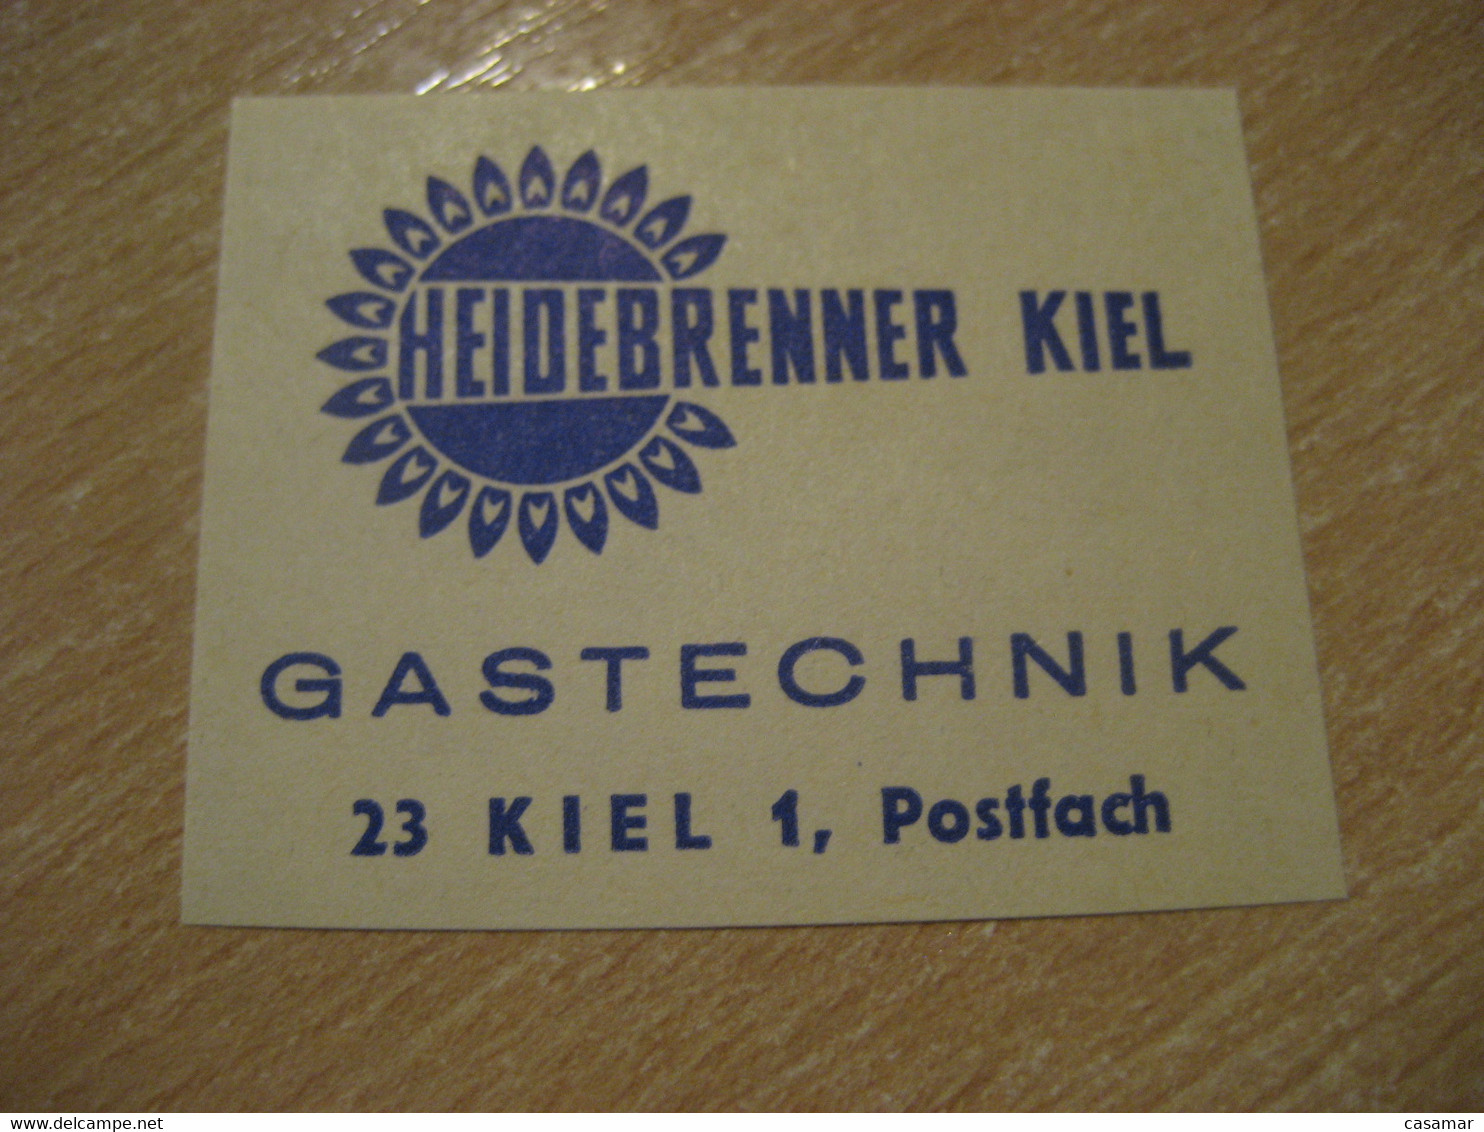 KIEL Heidebrenner Gastechnik Gas Energy Science Geology Poster Stamp Vignette GERMANY Label - Gas